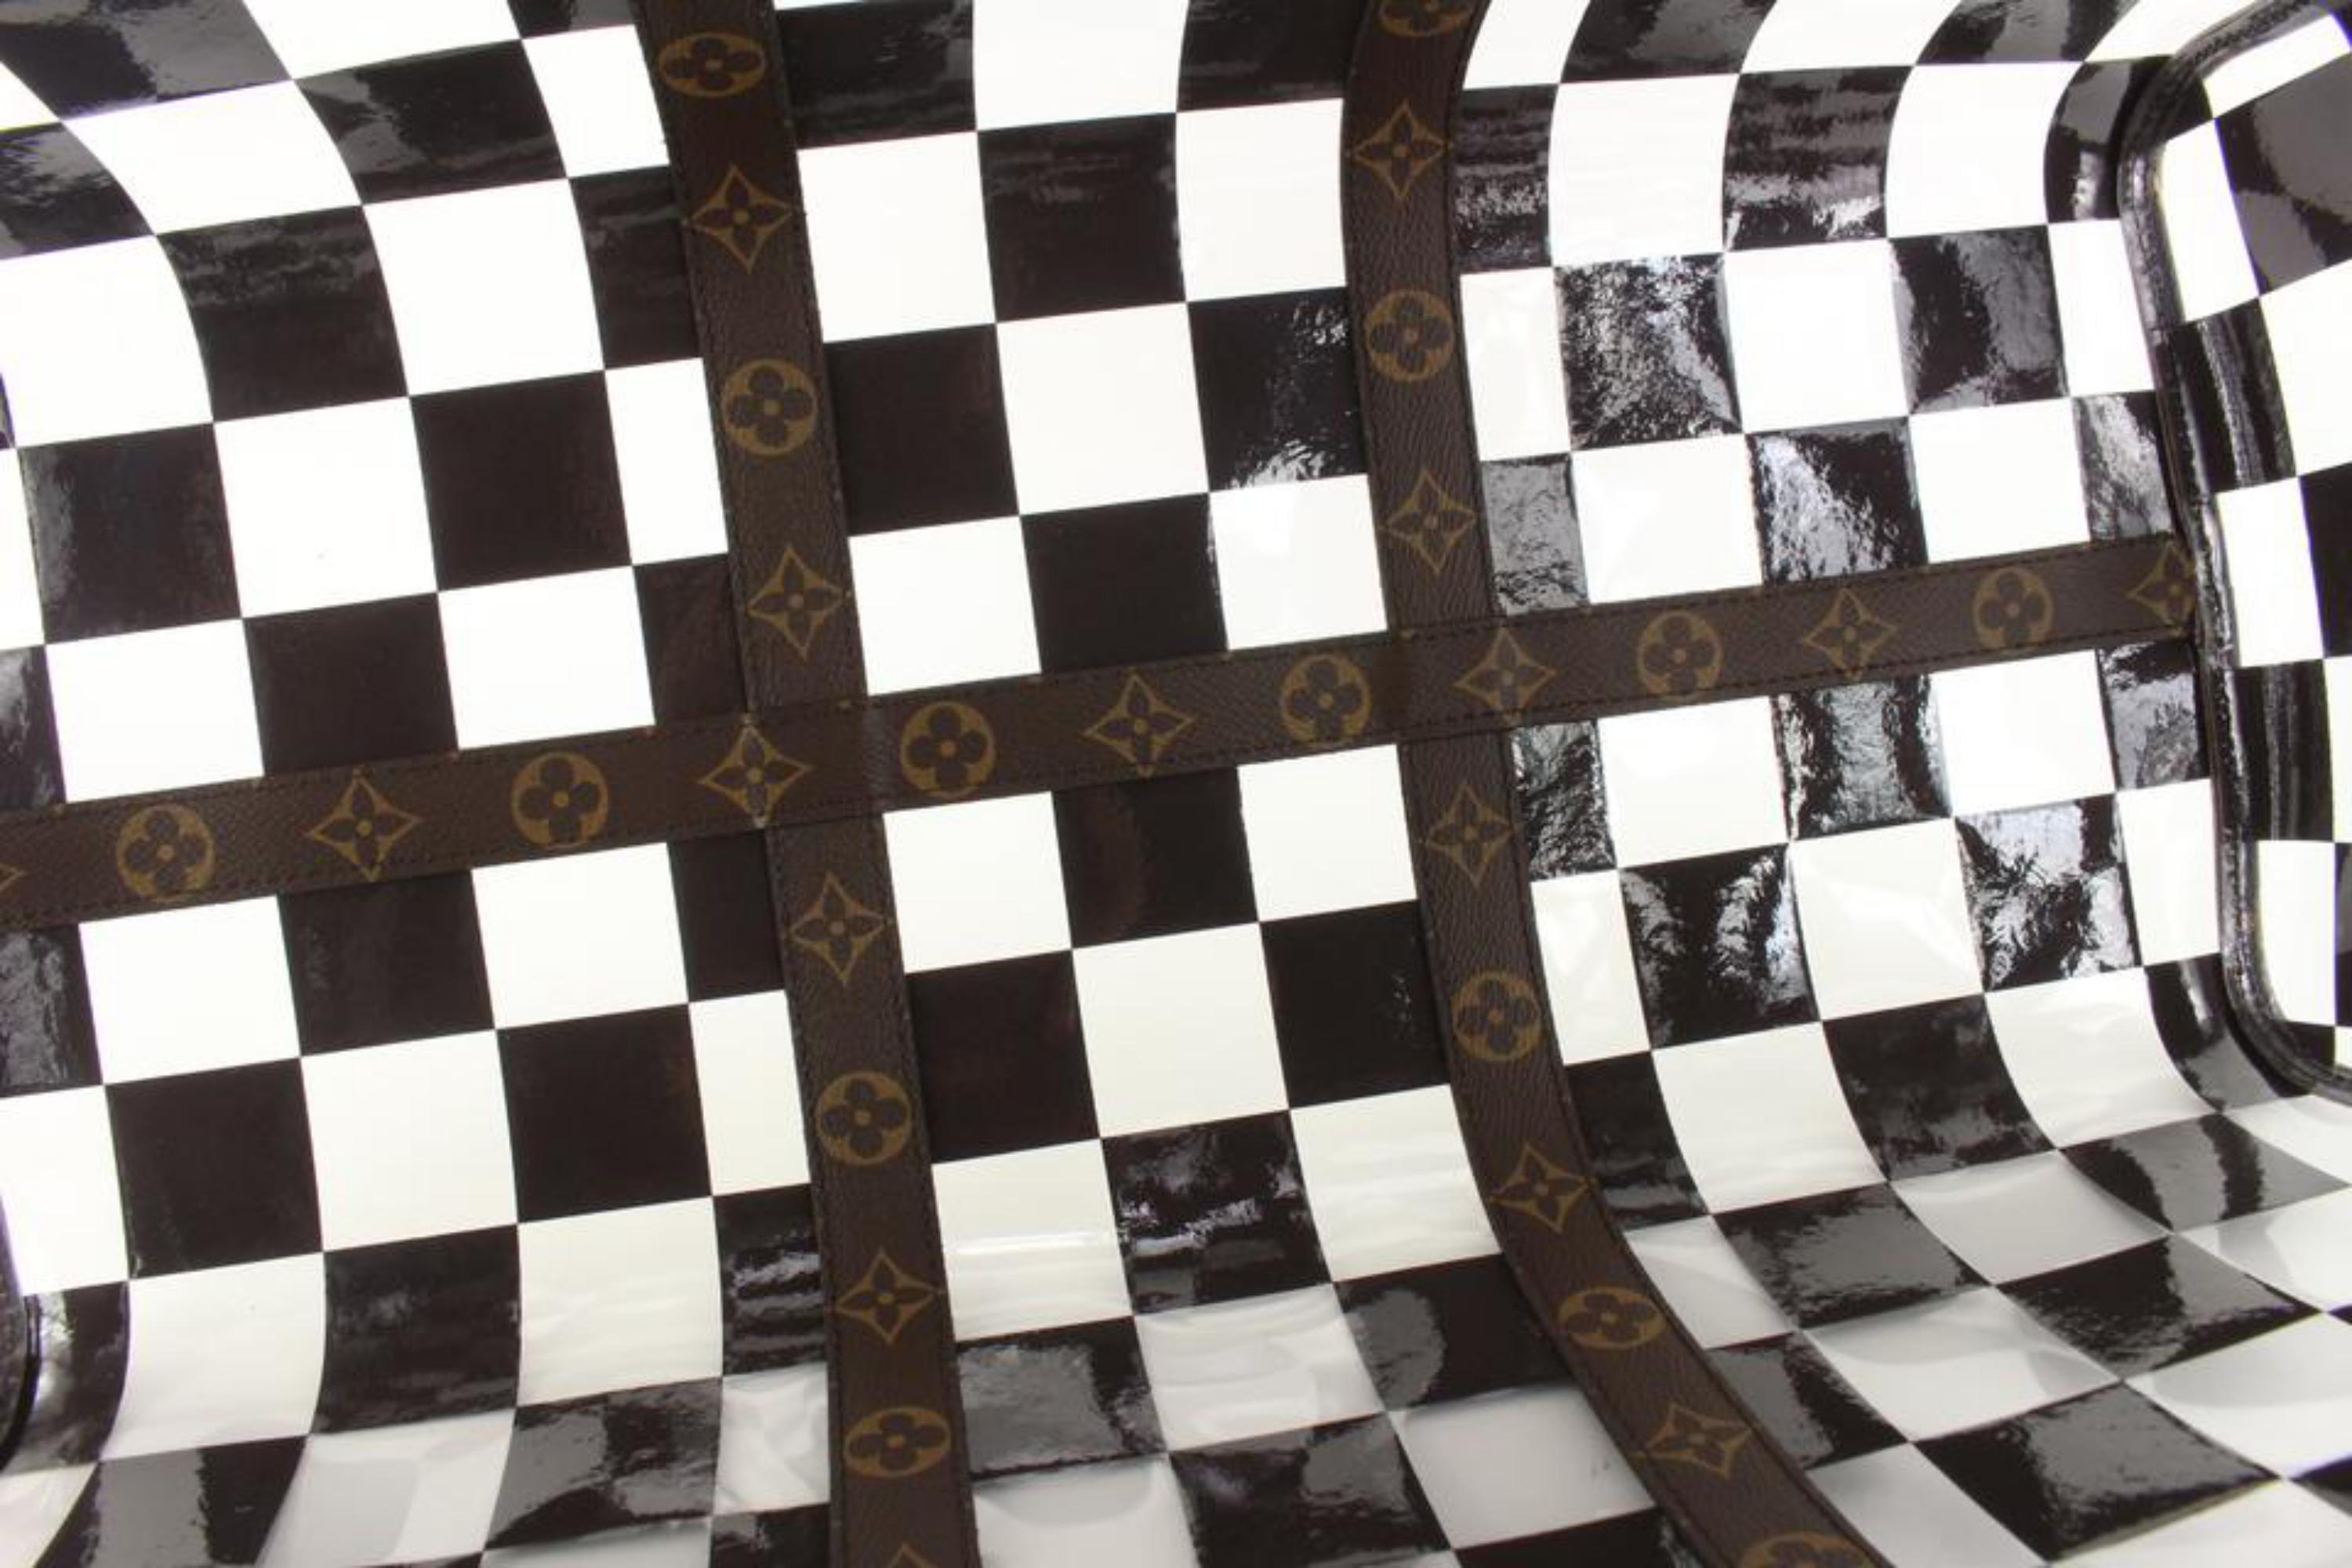 Louis Vuitton Transparent Vinyl and Monogram Canvas Chess Keepall